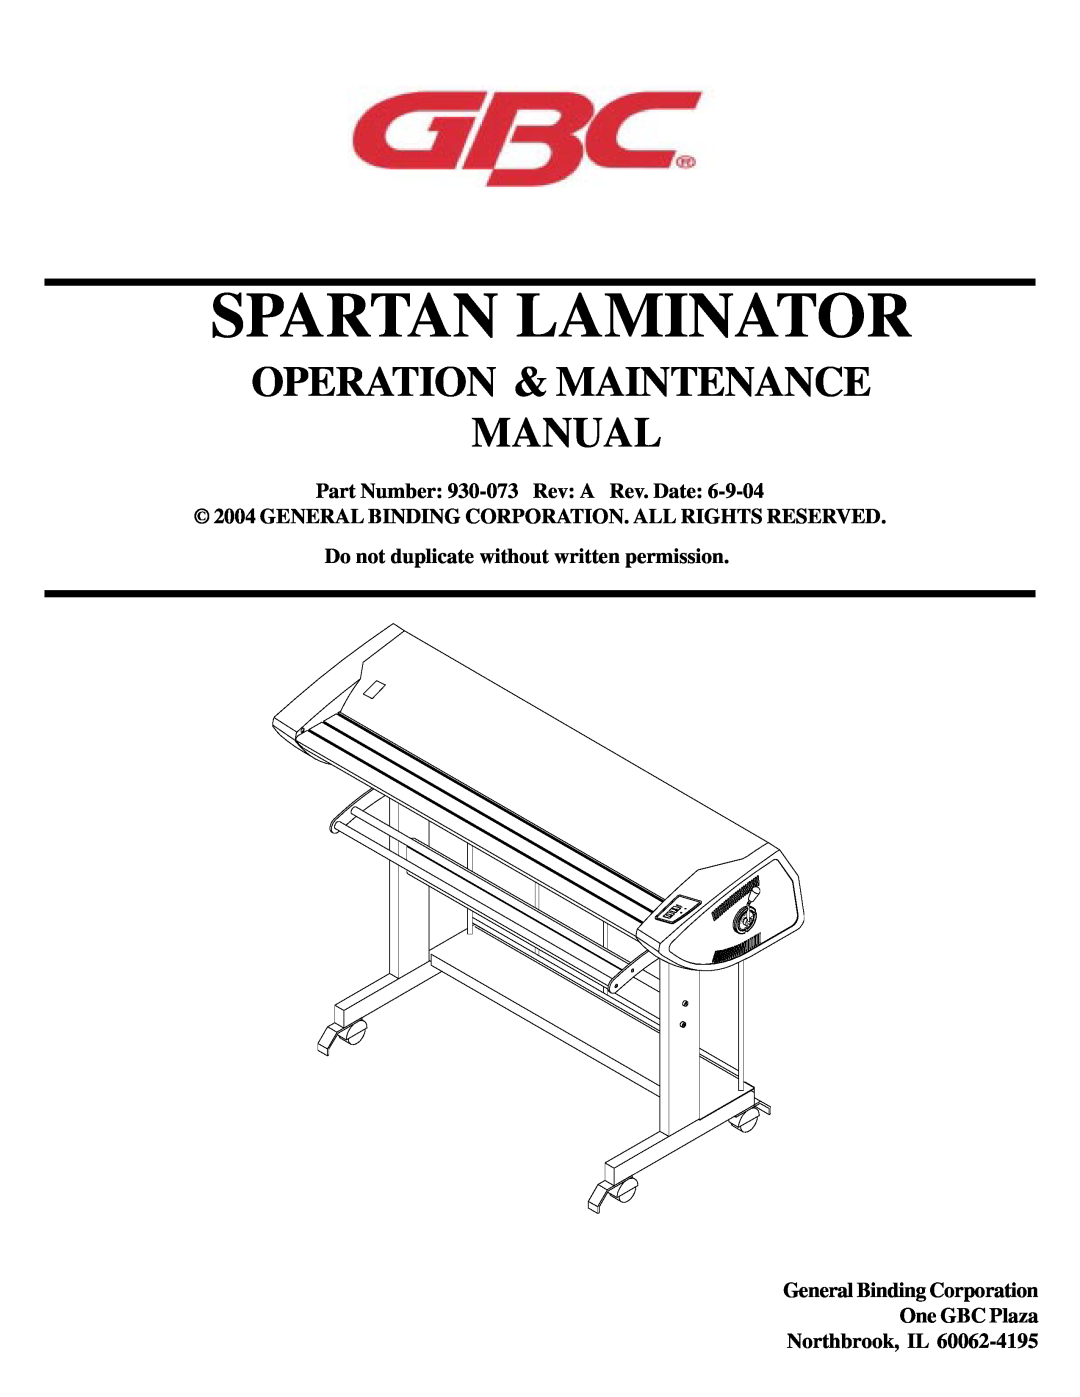 GBC 930-073 manual Spartan Laminator, Operation & Maintenance Manual 